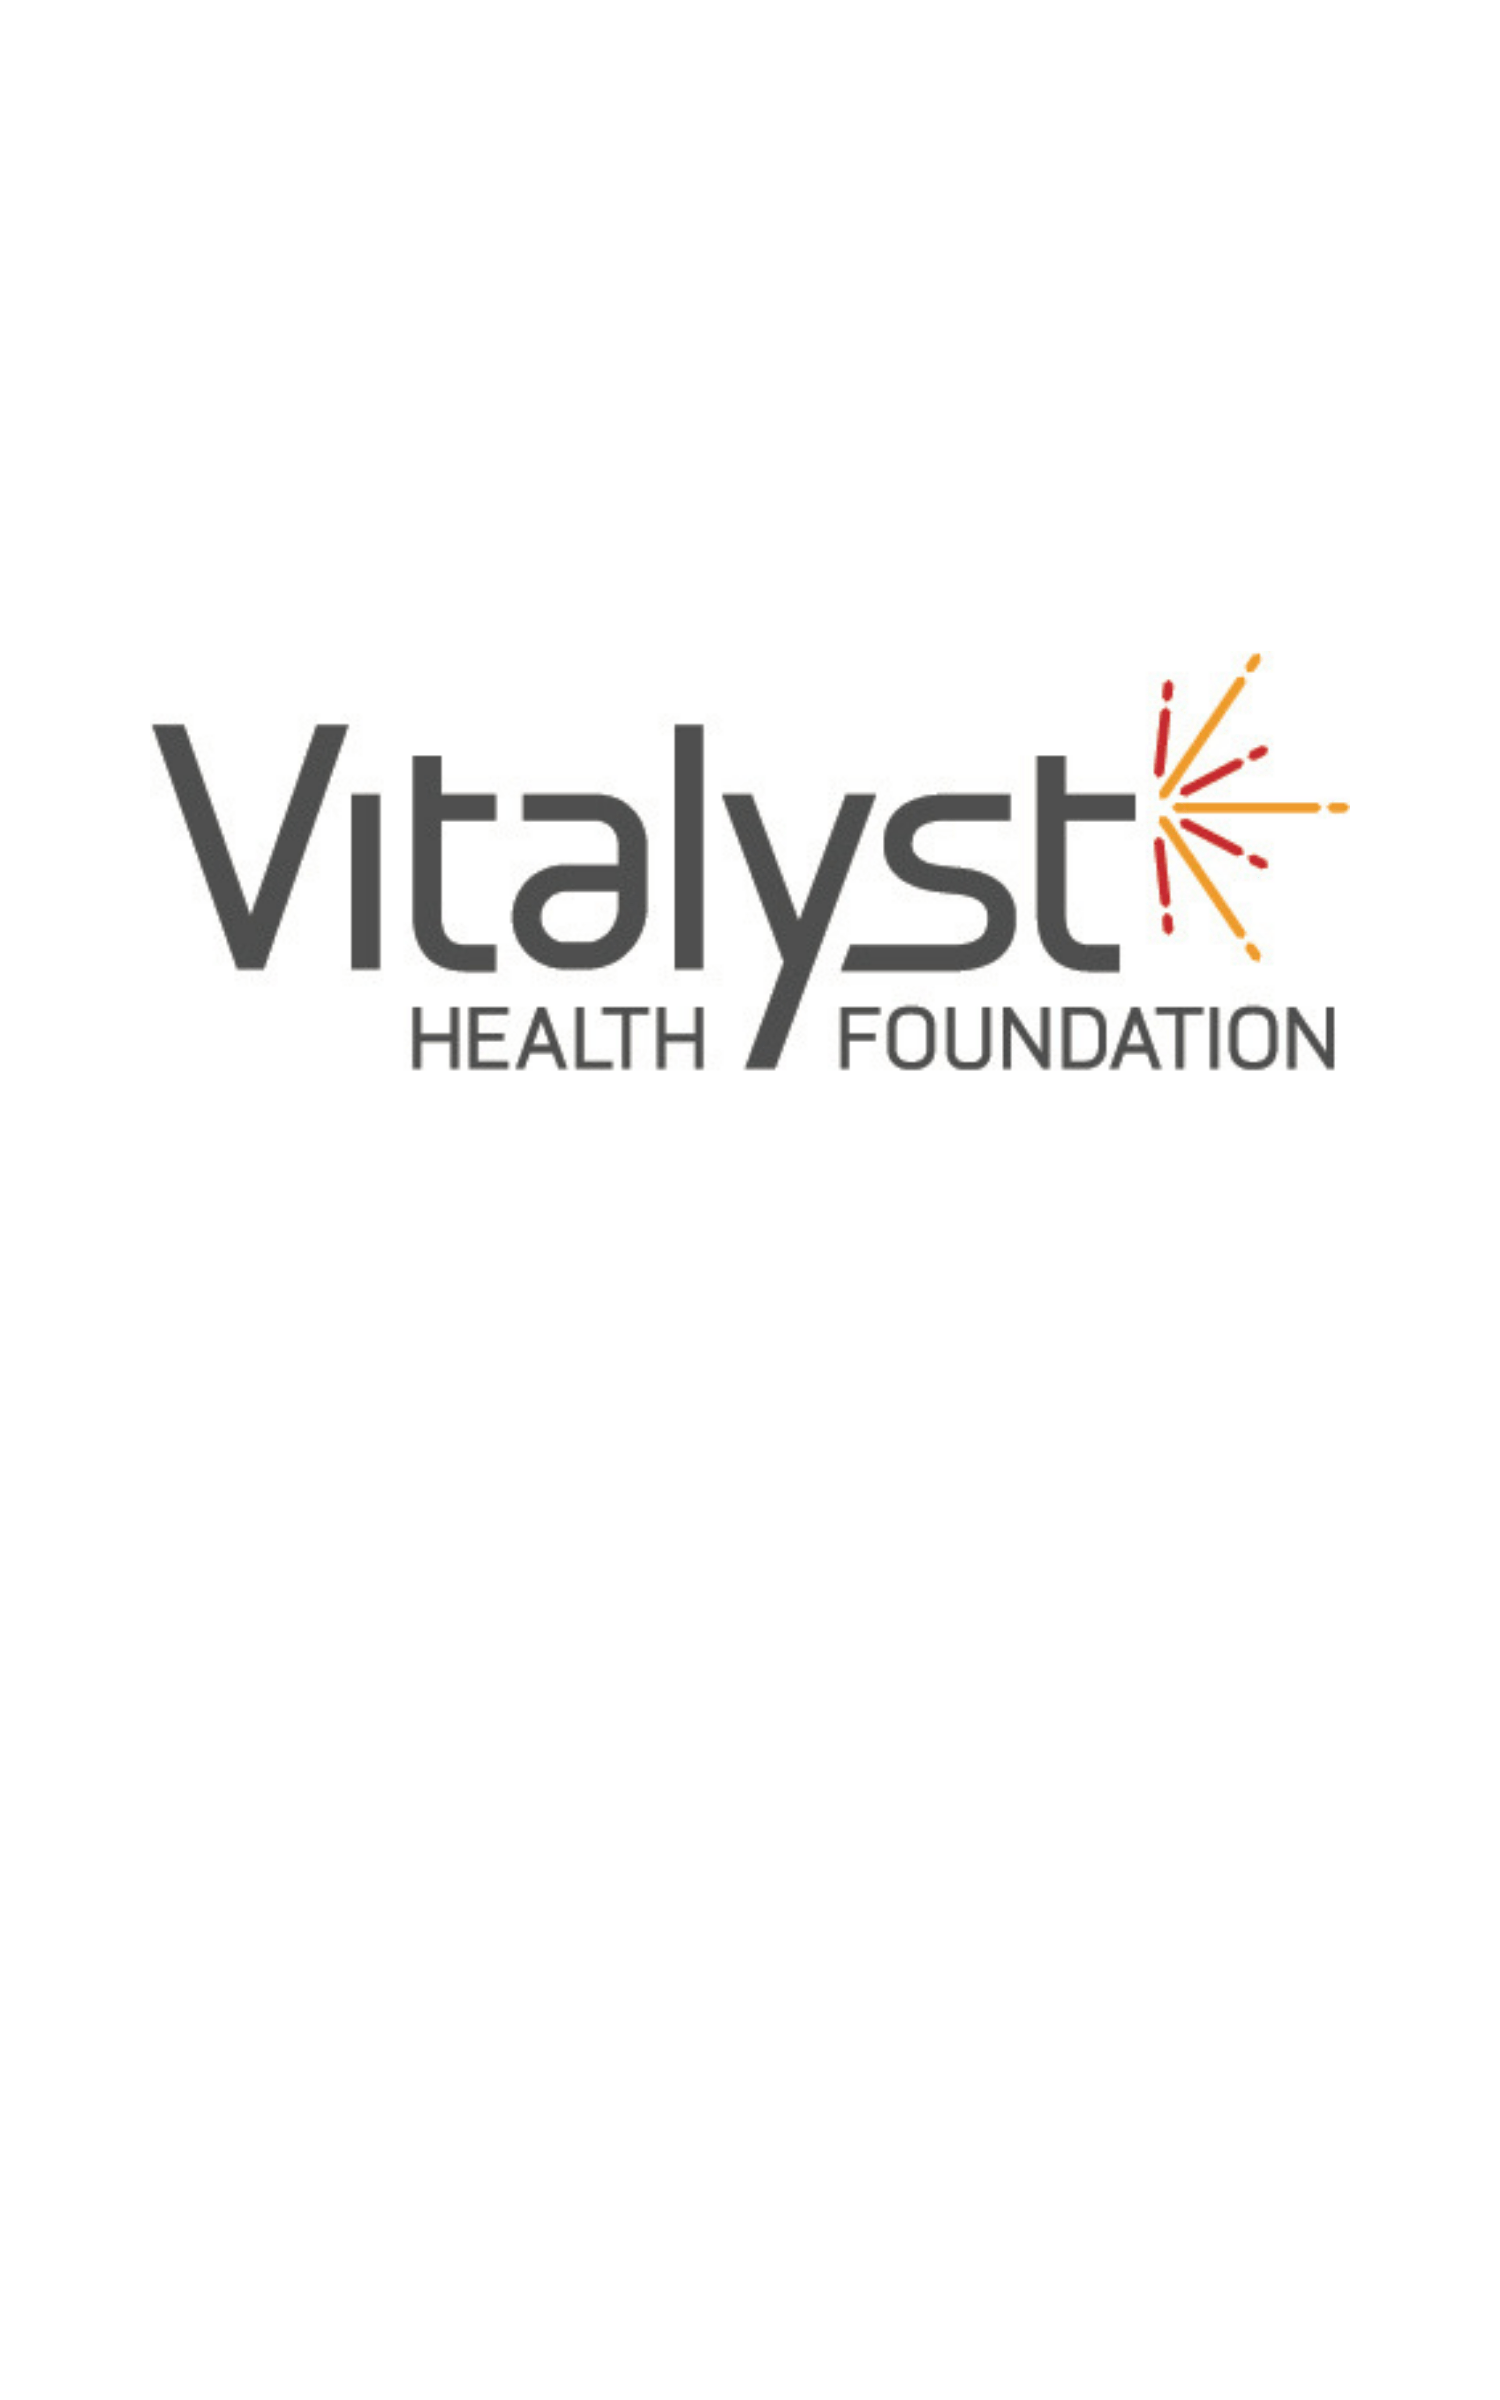 Vitalyst Logo - Sydney Fox - Vitalyst Health